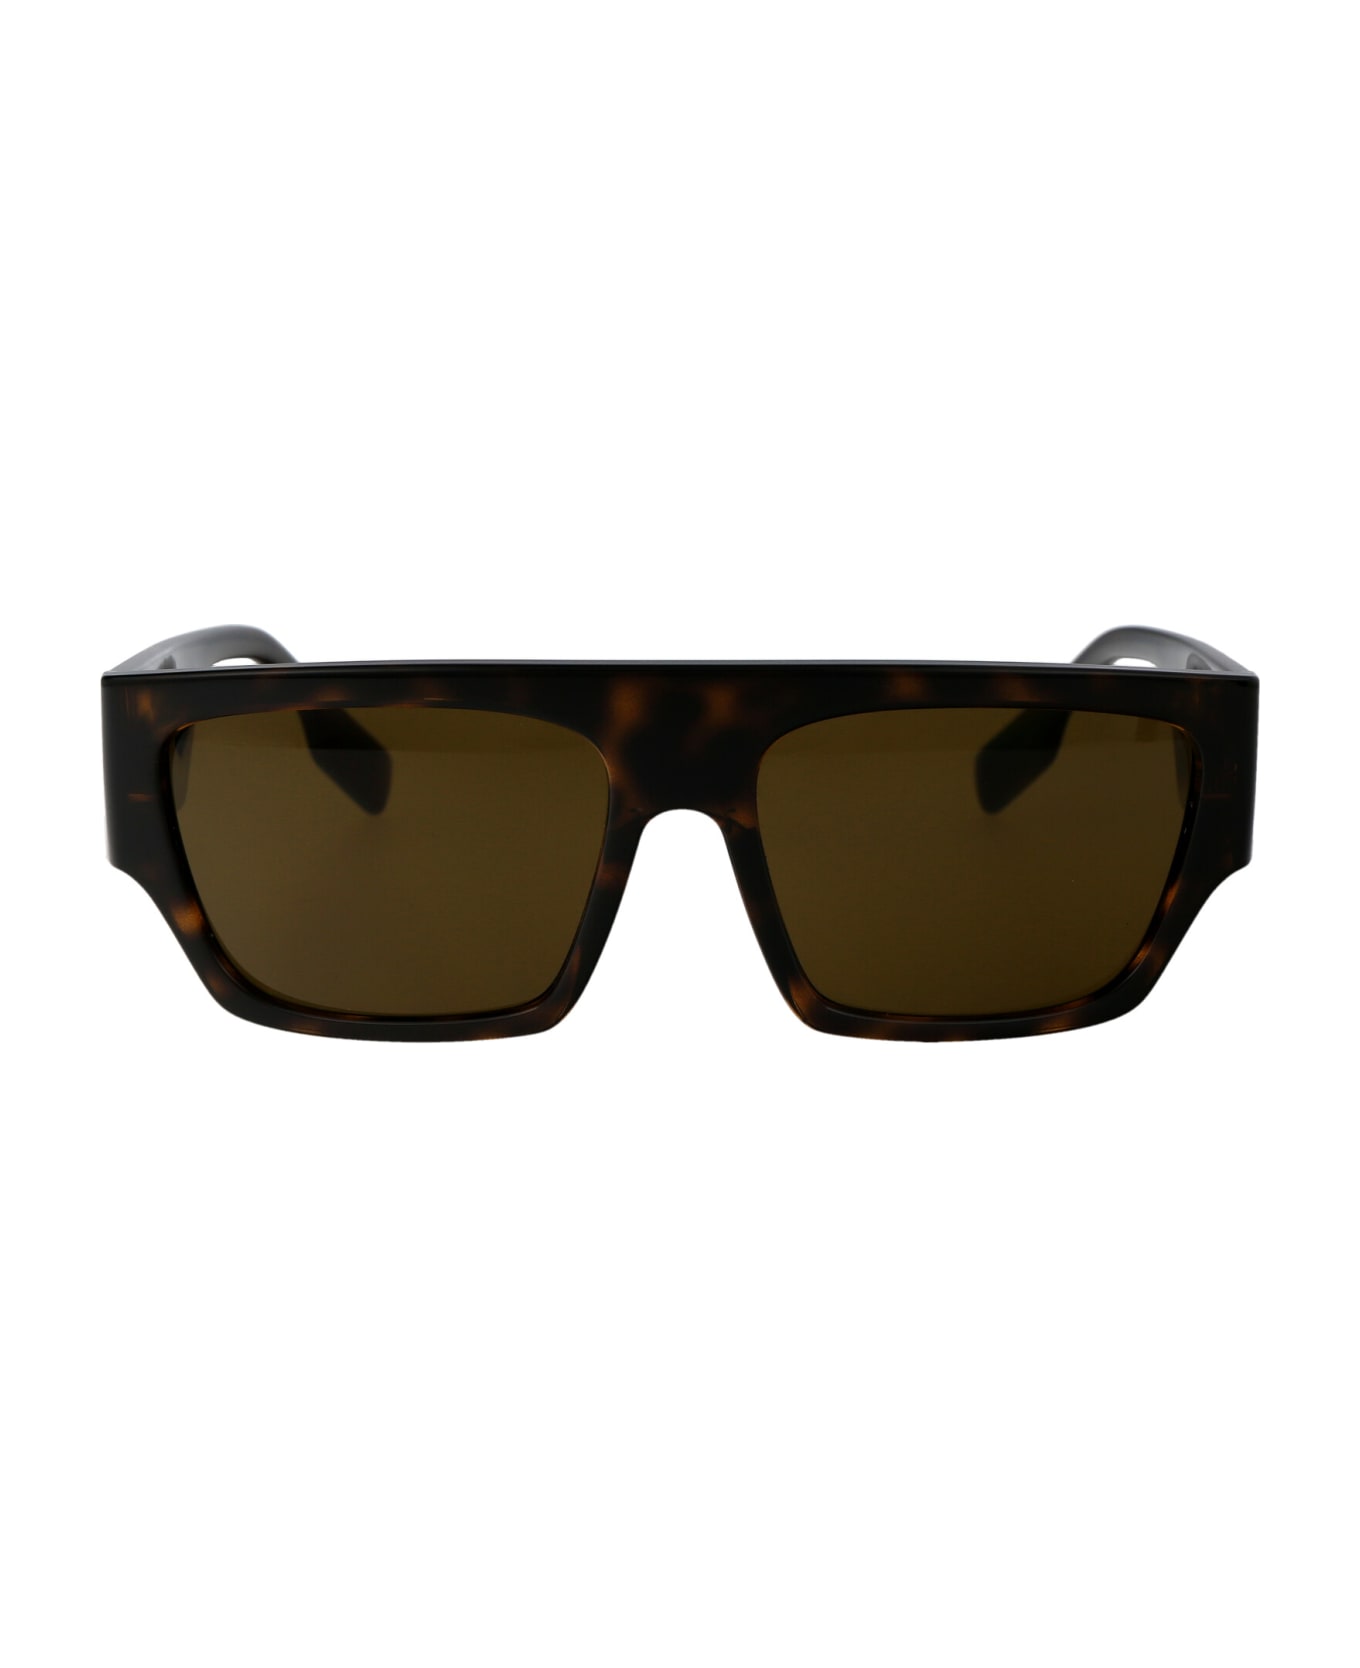 Burberry Eyewear Micah Sunglasses - 300273 DARK HAVANA サングラス